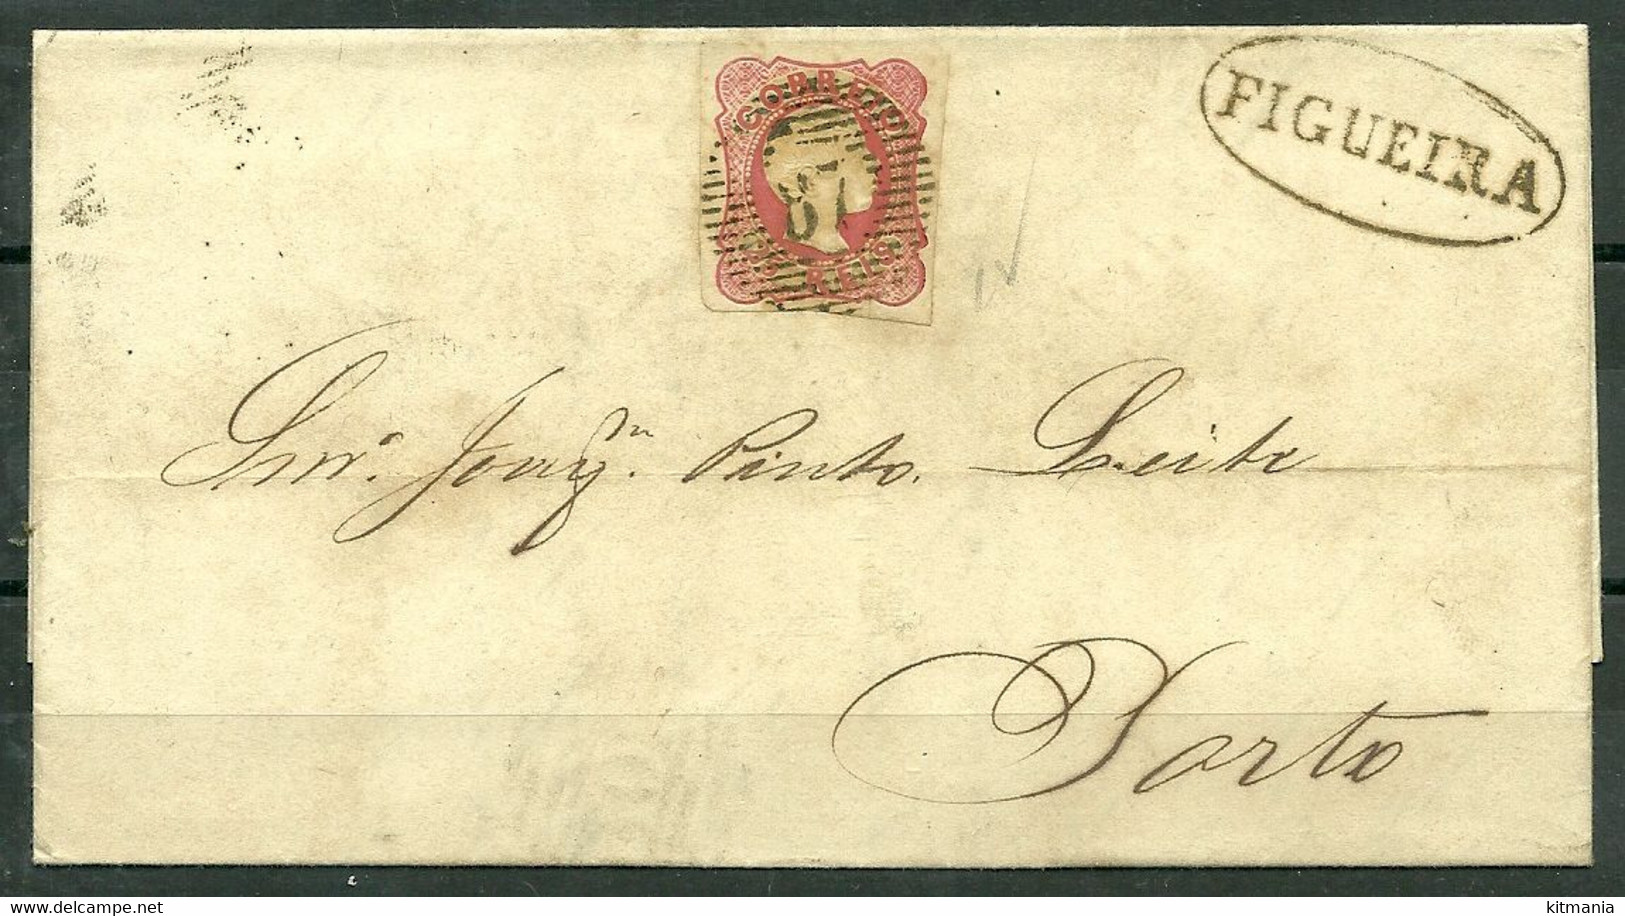 1856/58 Portugal D.Pedro V #13 On Letter From Figeira Da Foz To Porto - P1609 - Brieven En Documenten